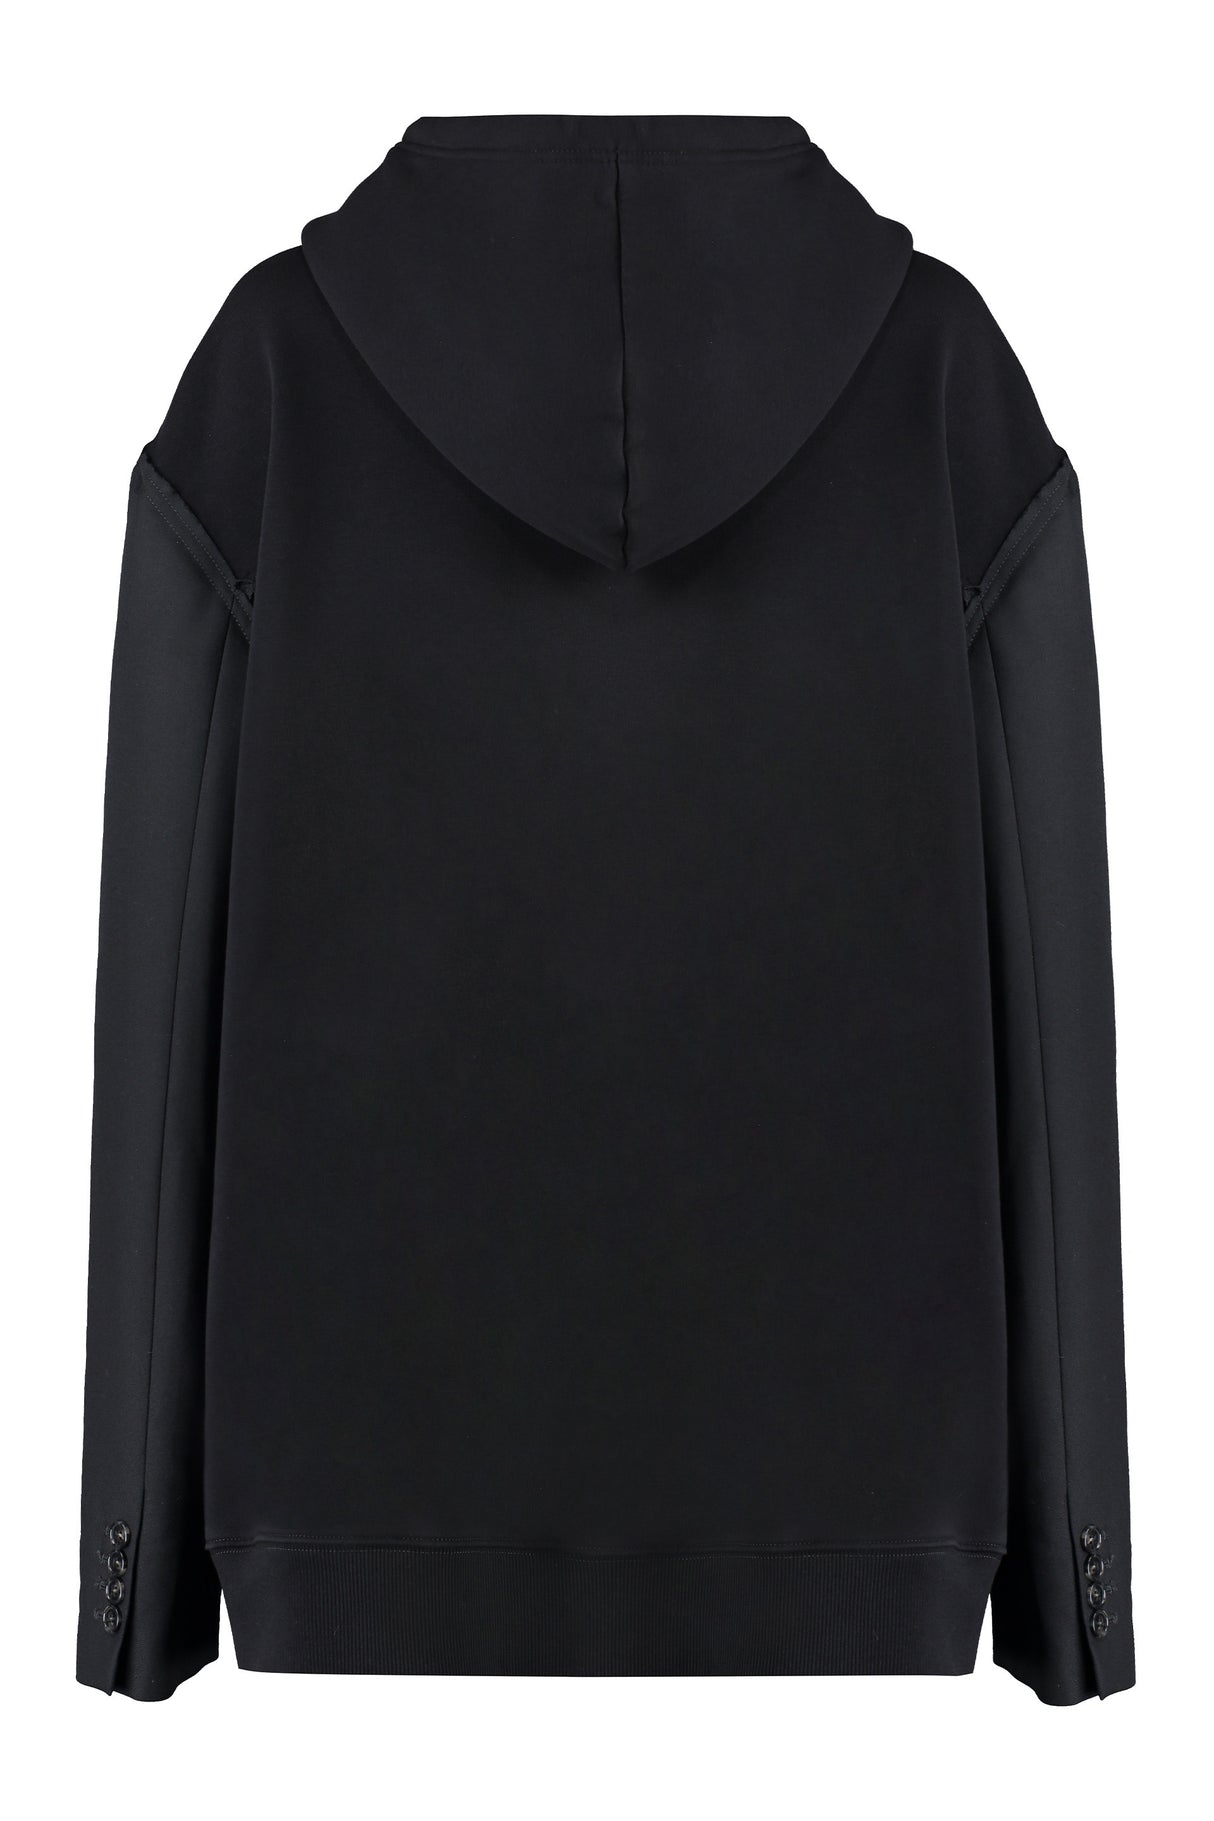 MM6 MAISON MARGIELA Stylish Women's Black Hooded Sweatshirt - FW23